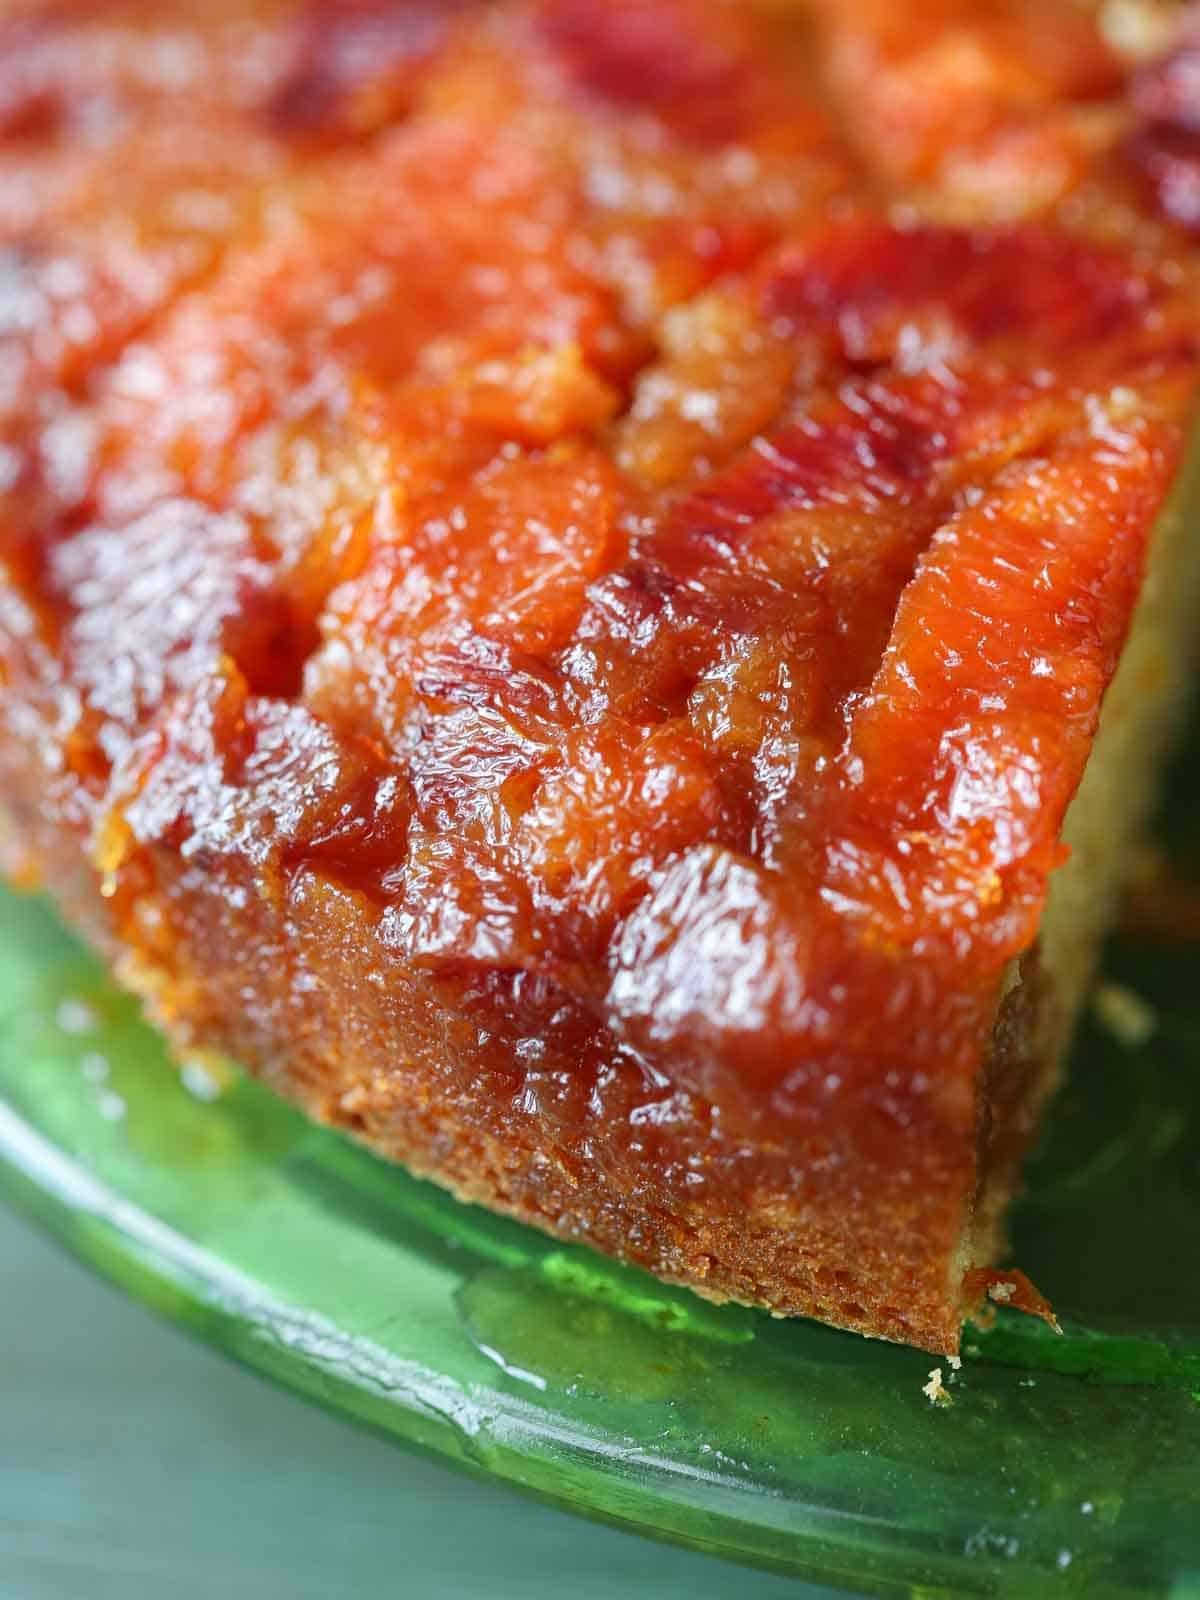 https://cheflindseyfarr.com/wp-content/uploads/2020/11/orange-upside-down-cake-shiny.jpg